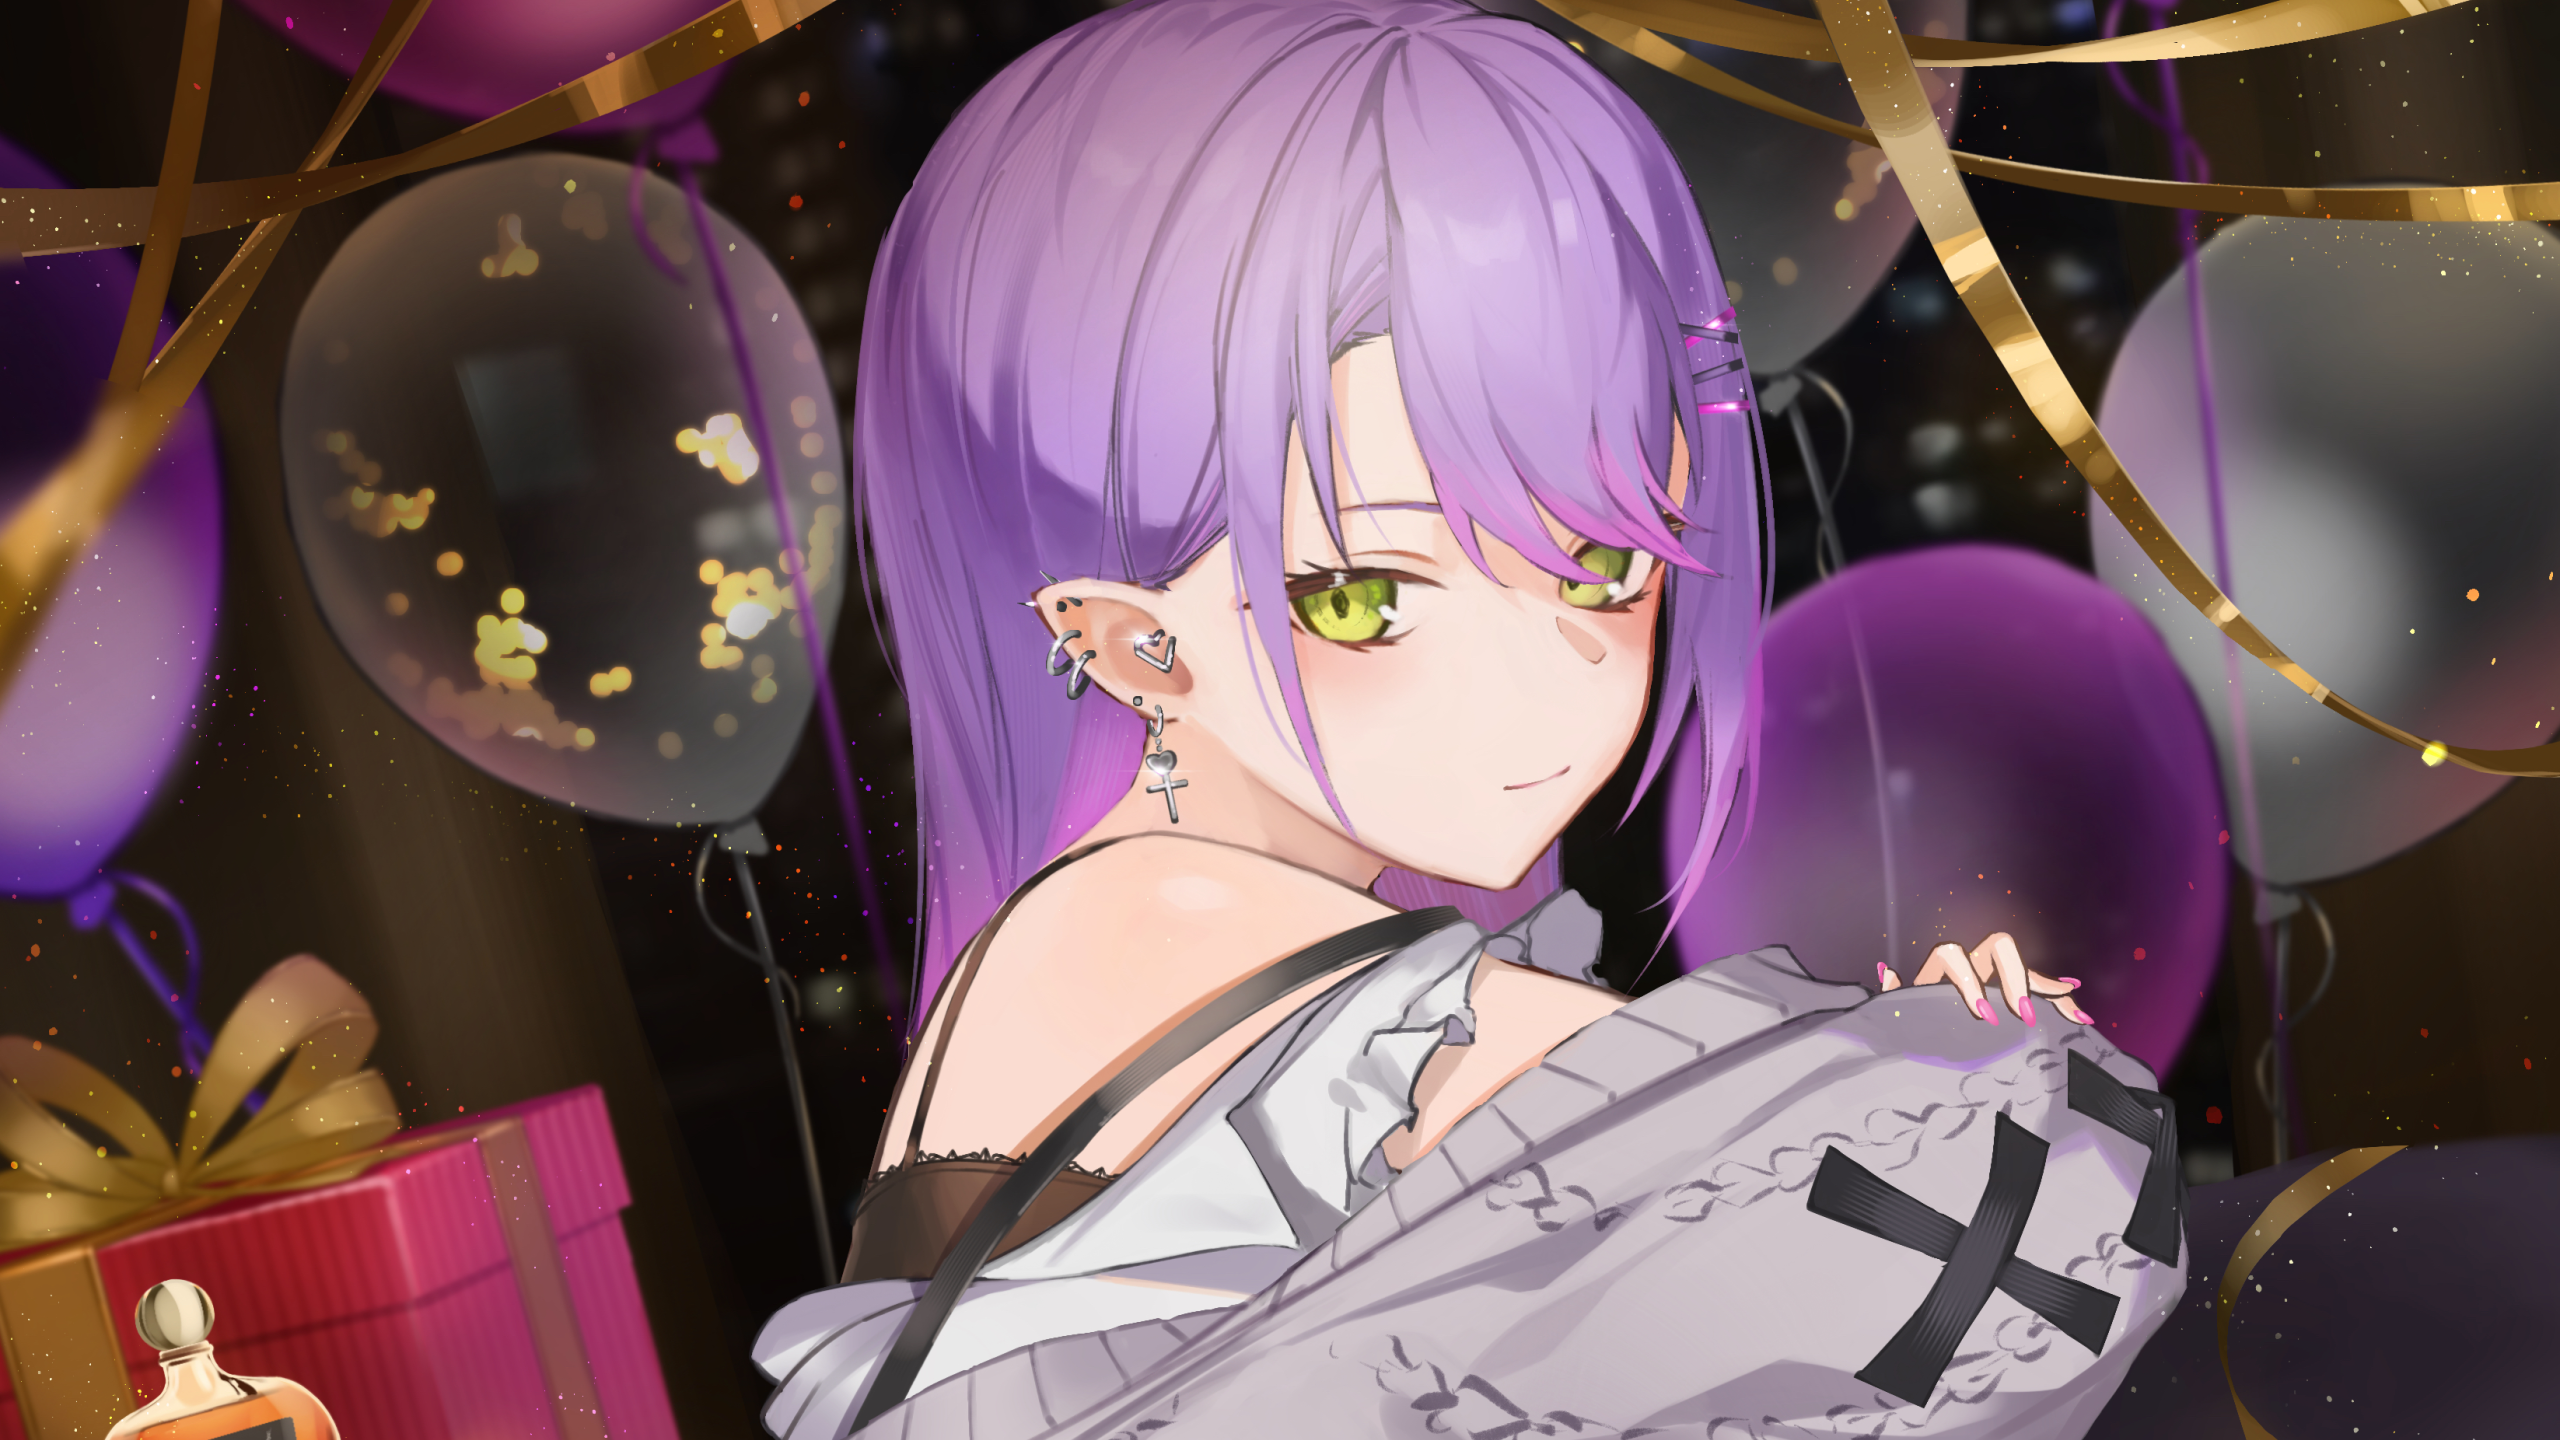 Anime 2560x1440 anime anime girls artwork balloon presents green eyes purple hair piercing looking at viewer earring smiling cross Hololive Virtual Youtuber Tokoyami Towa